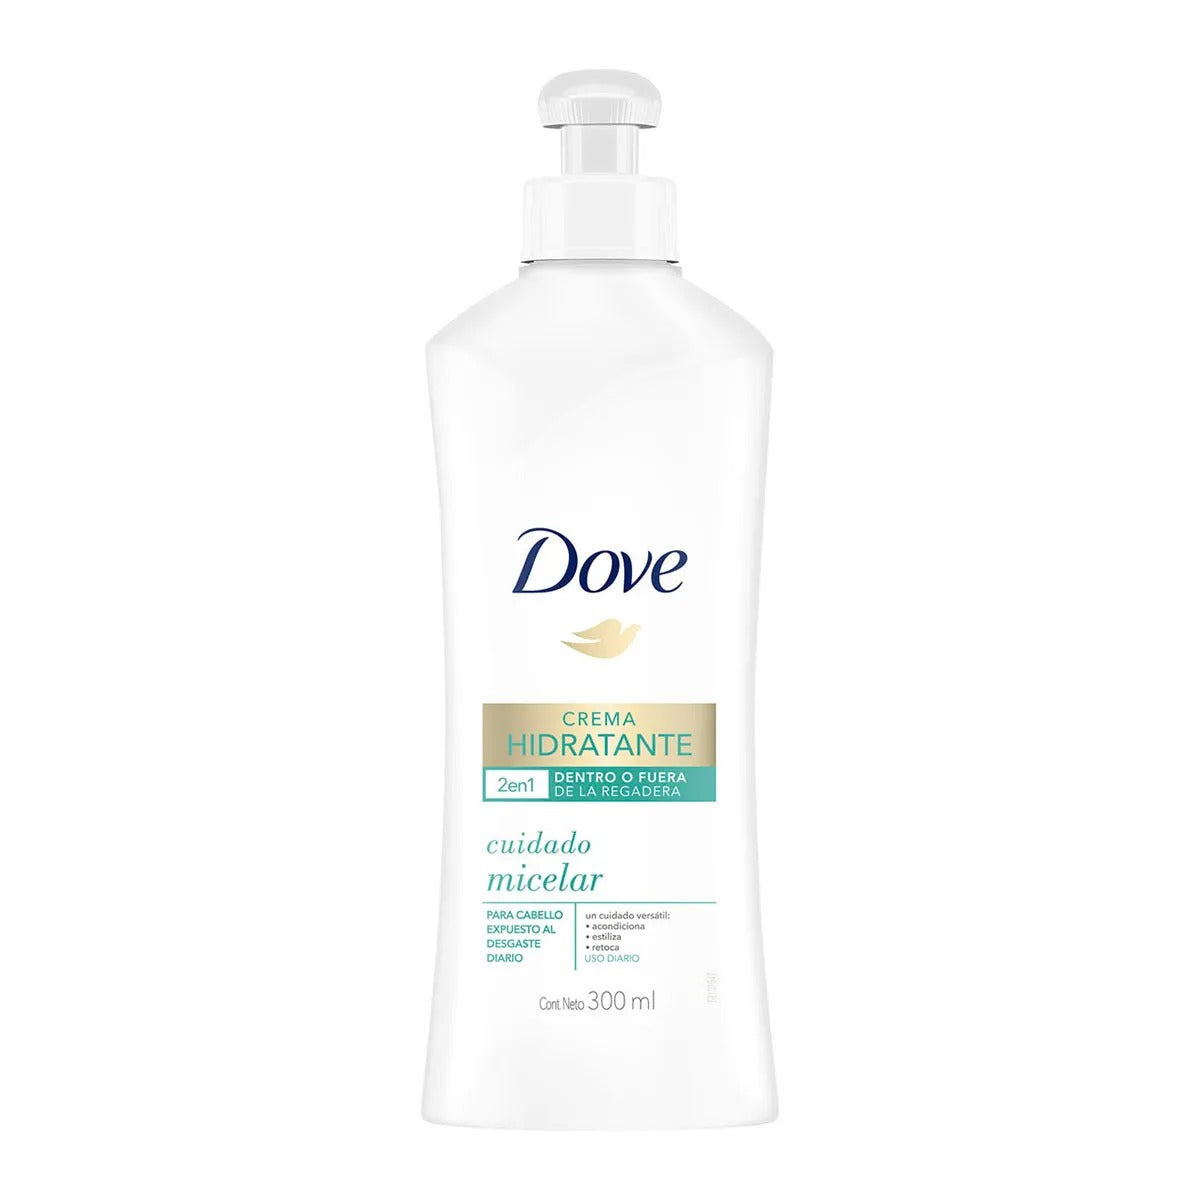 Dove Hair Treatment Micellar Care Moisturizing Cream 300ml